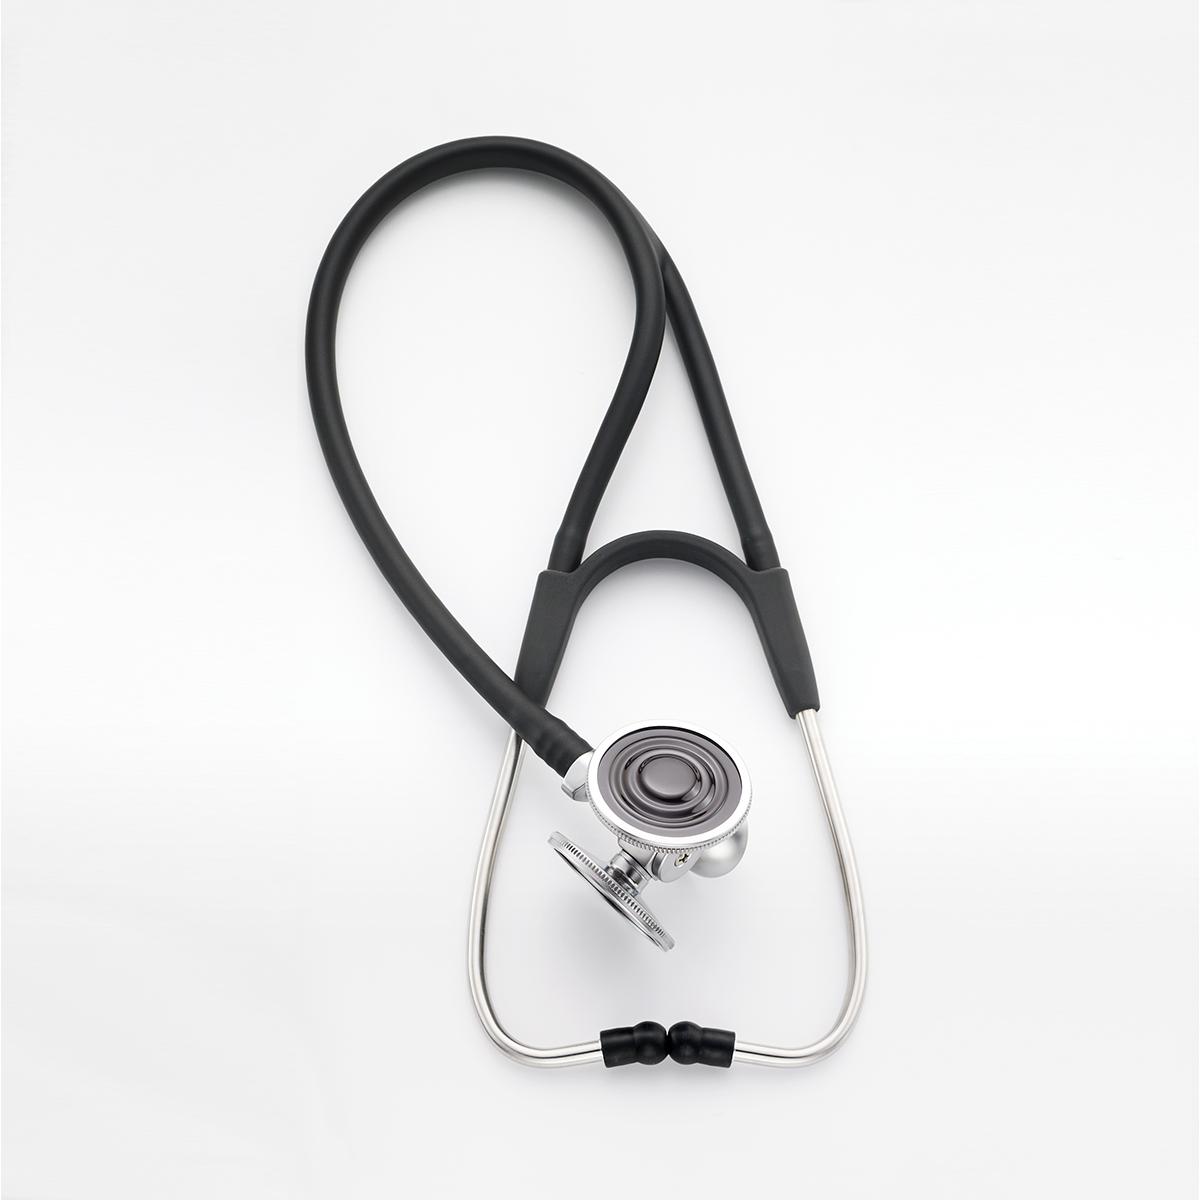 Harvey DLX-stetoskop, ovanifr&aring;n, tv&aring; huvuden